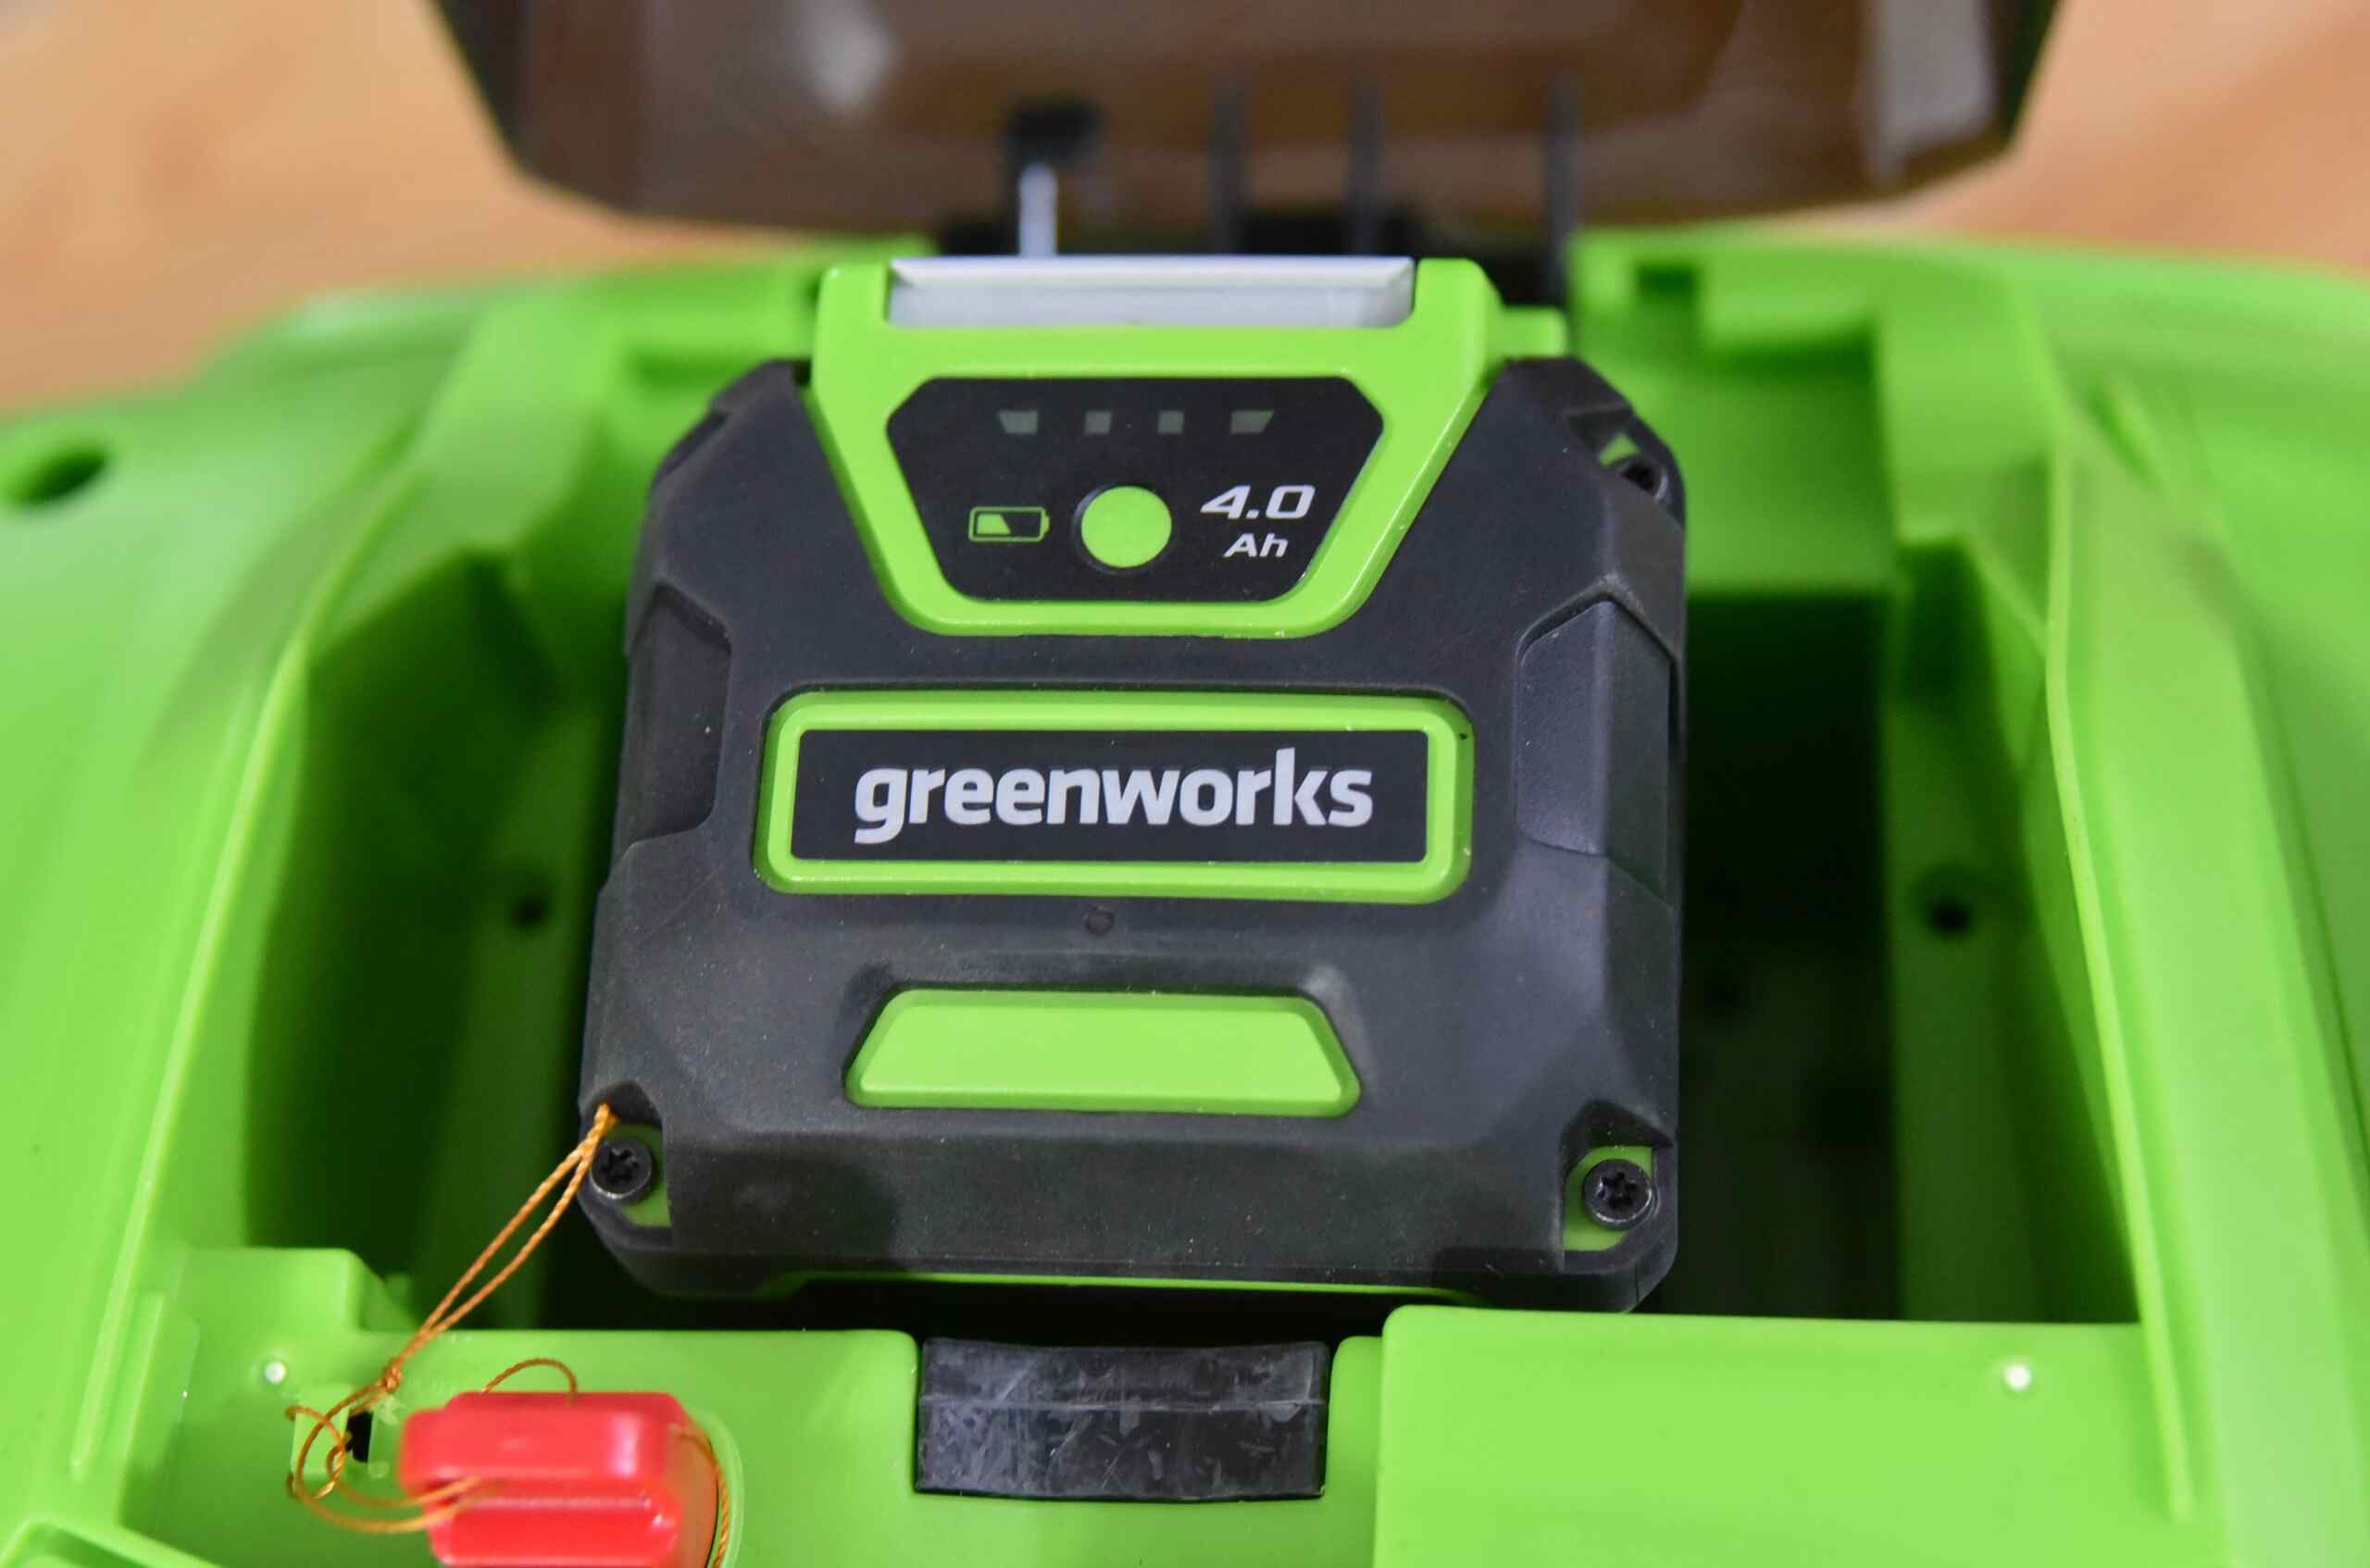 аккумуляторный отсек аэратора Greenworks GD40SC36